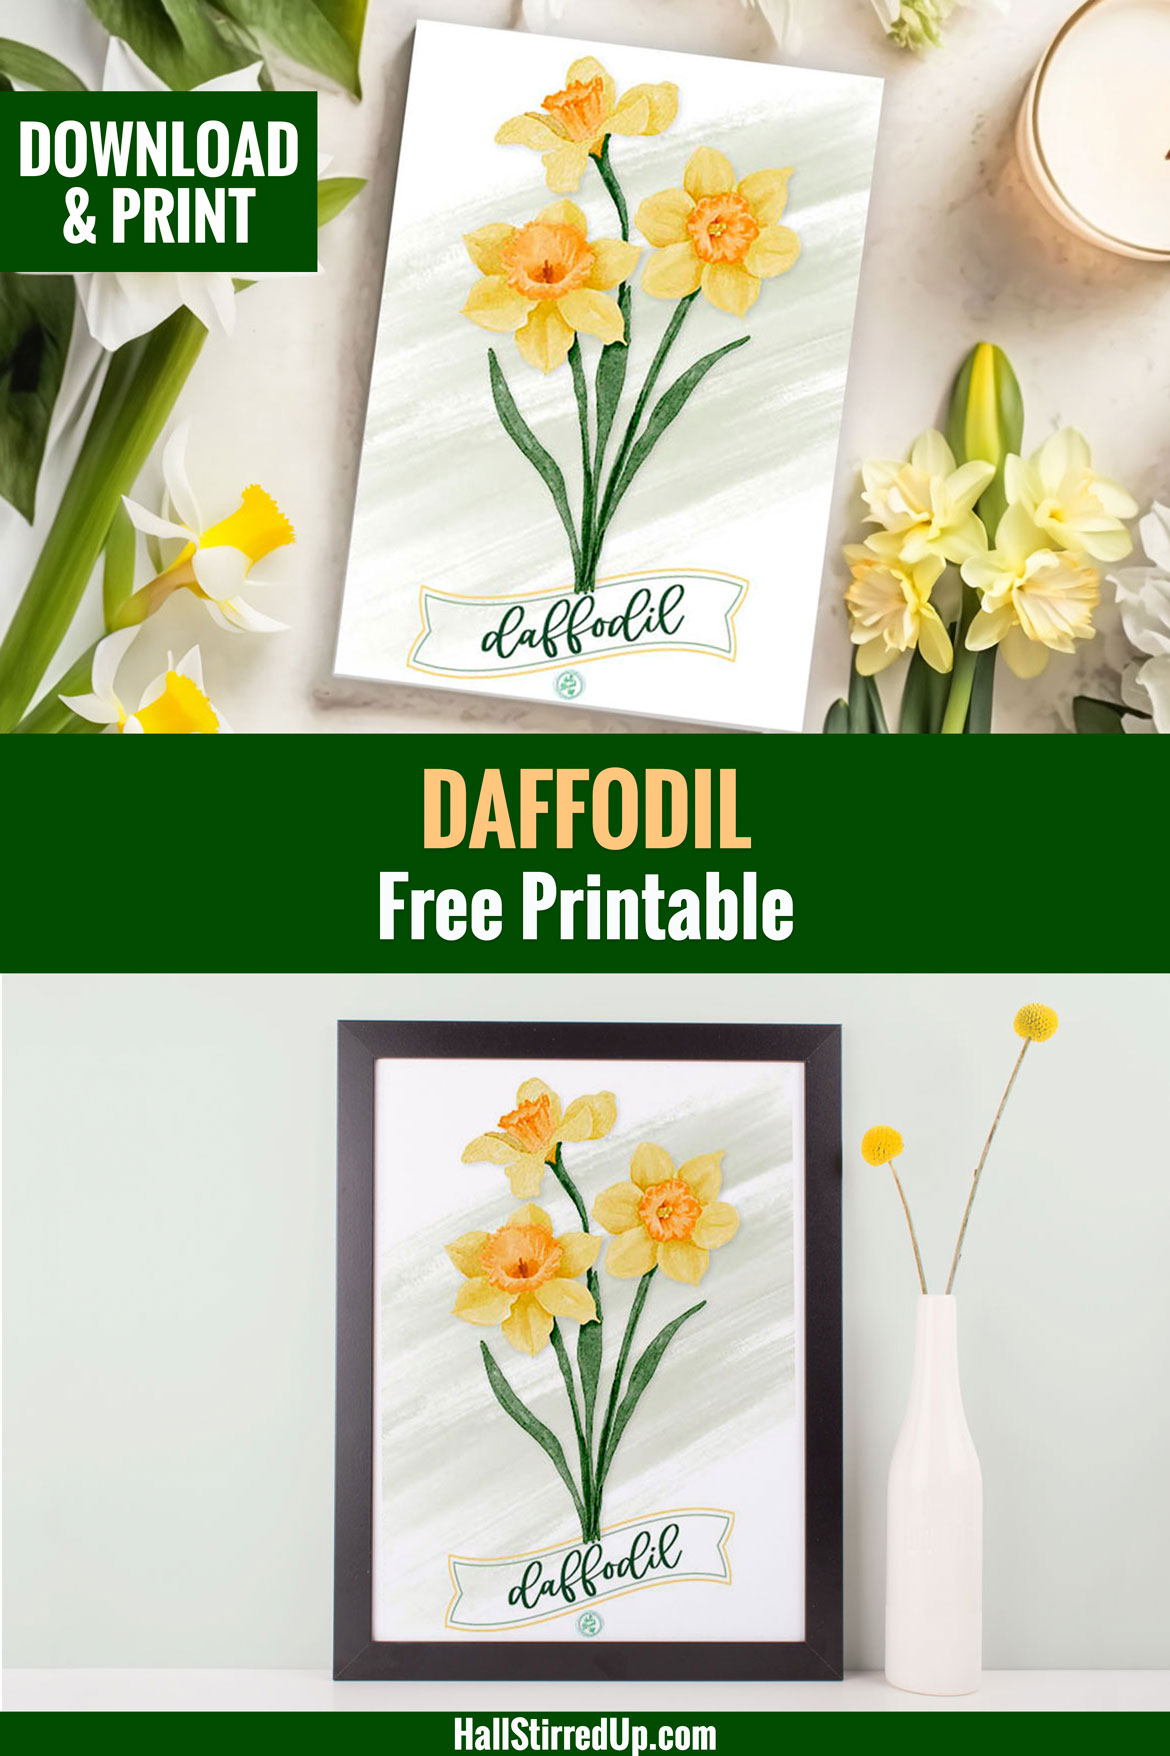 I love Daffodils Includes free printable